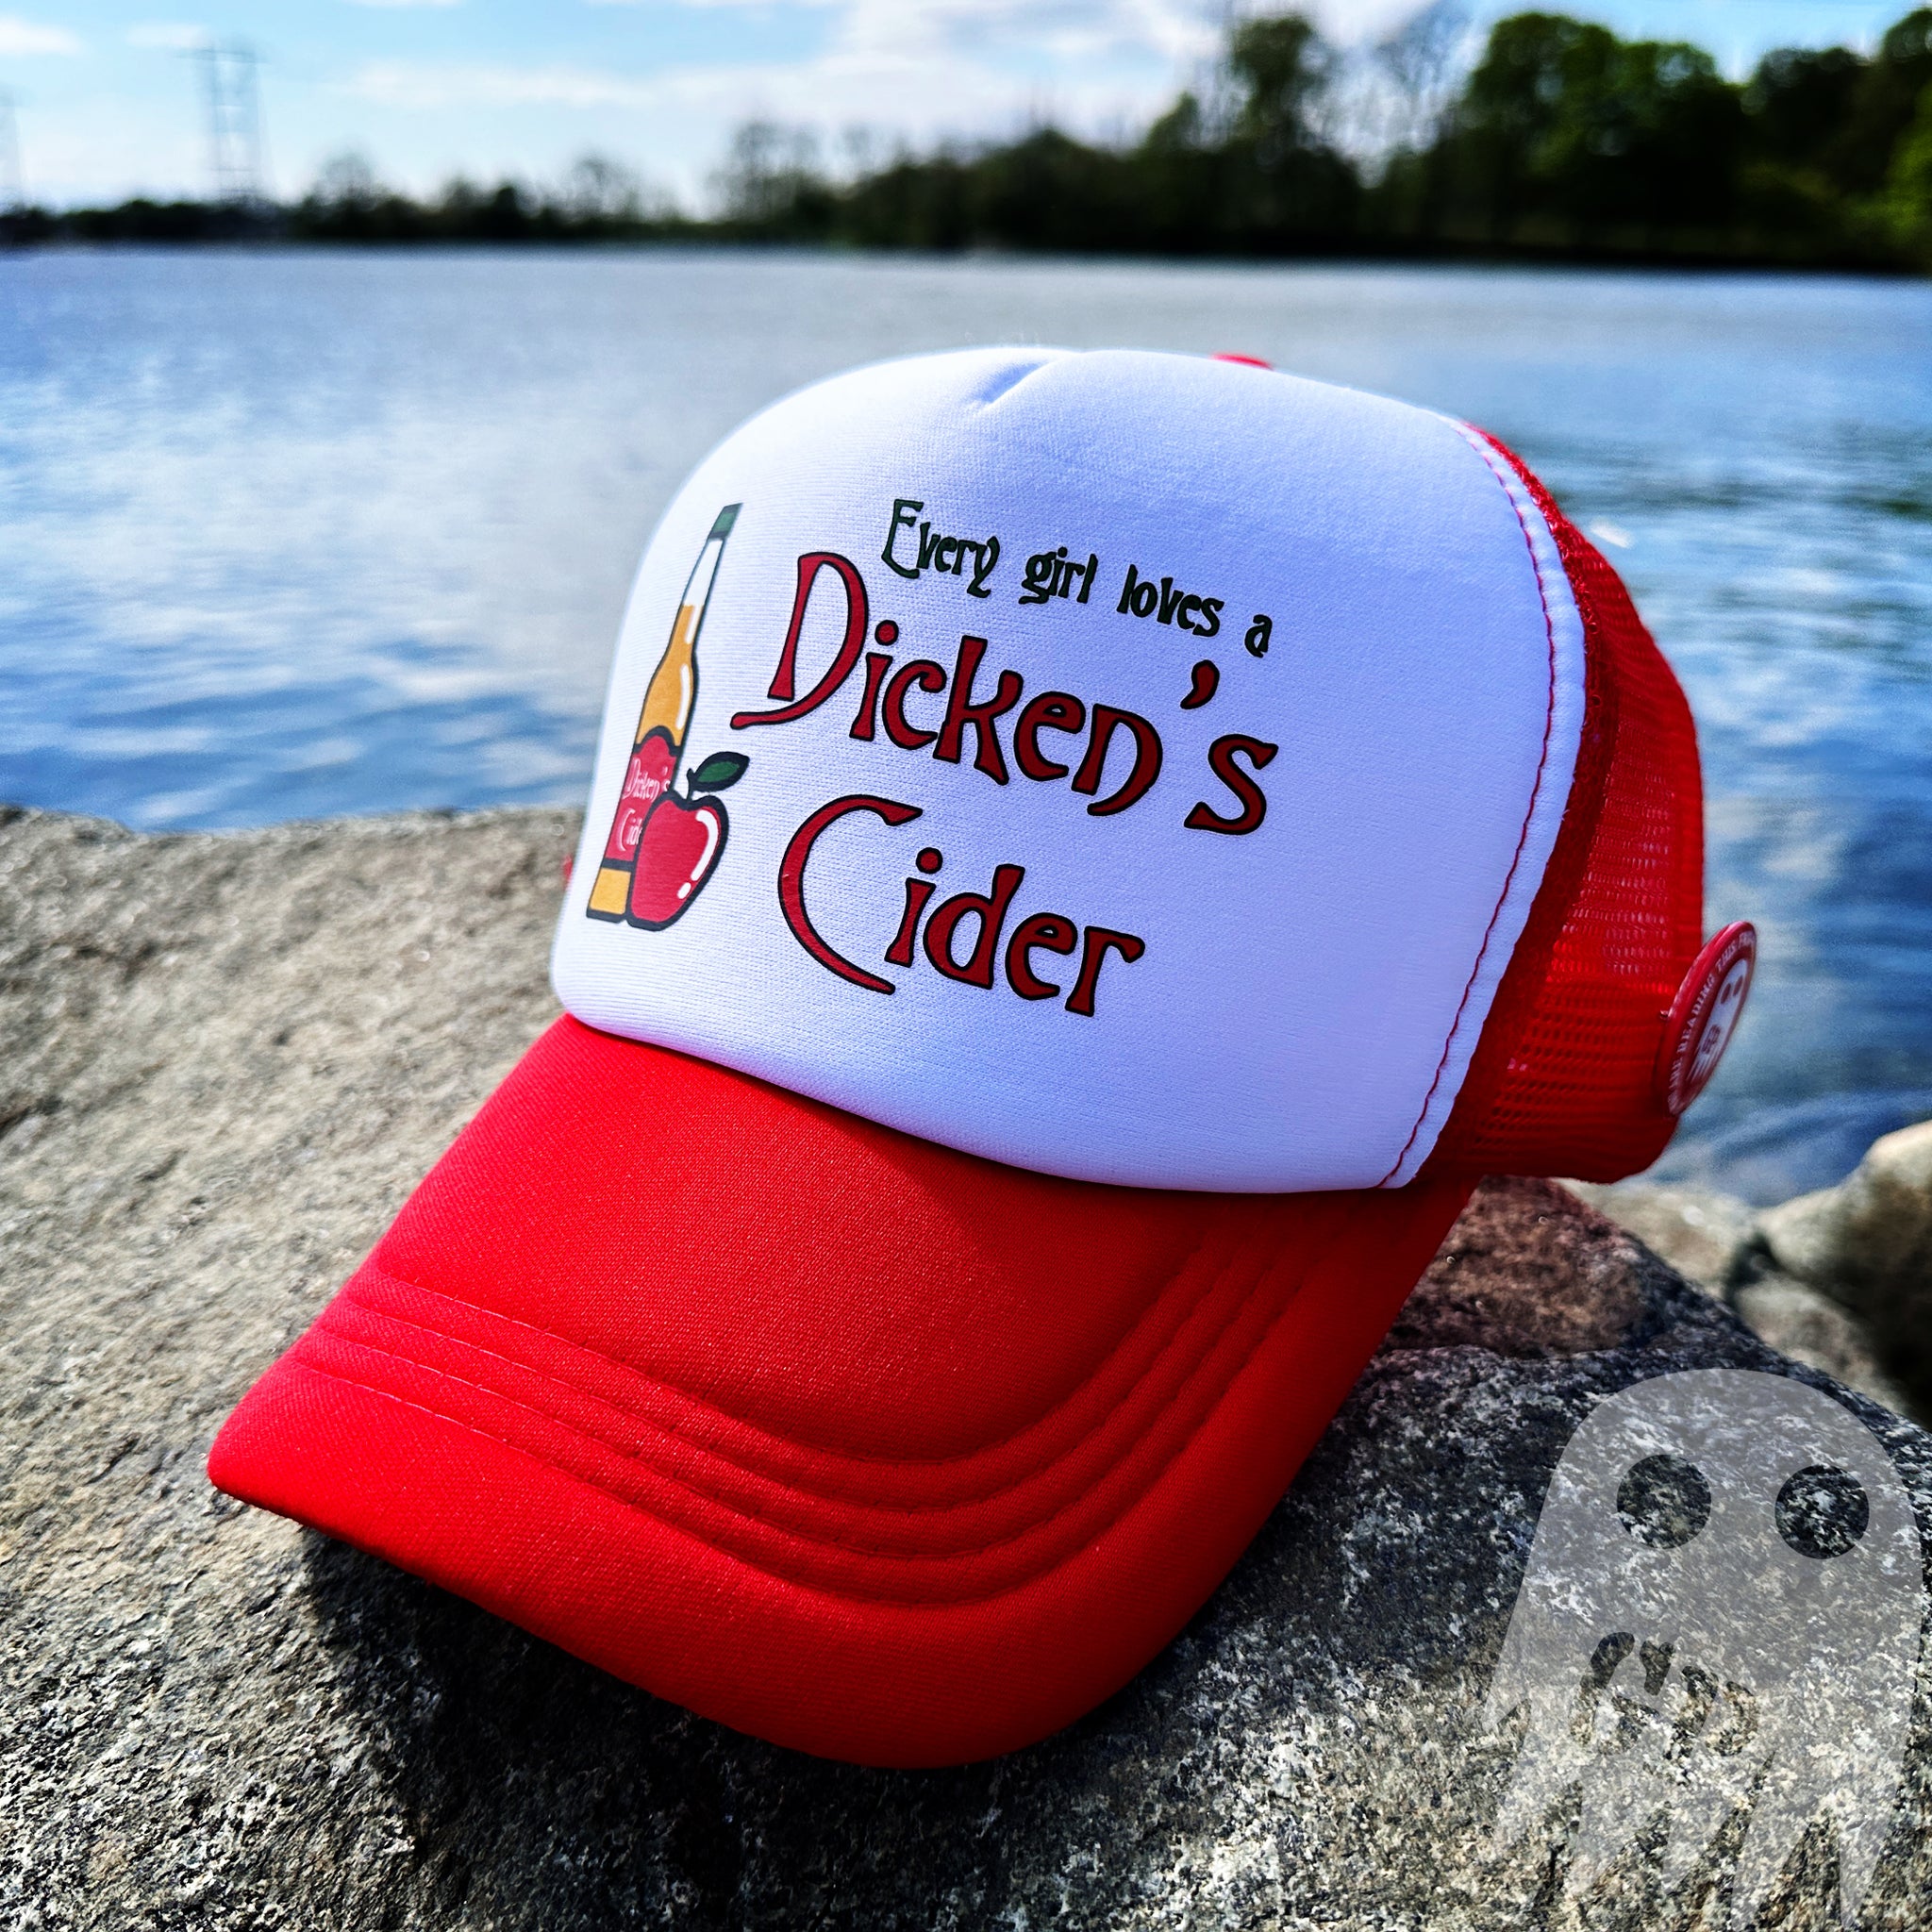 Dicken's Cider Company Trucker Hat